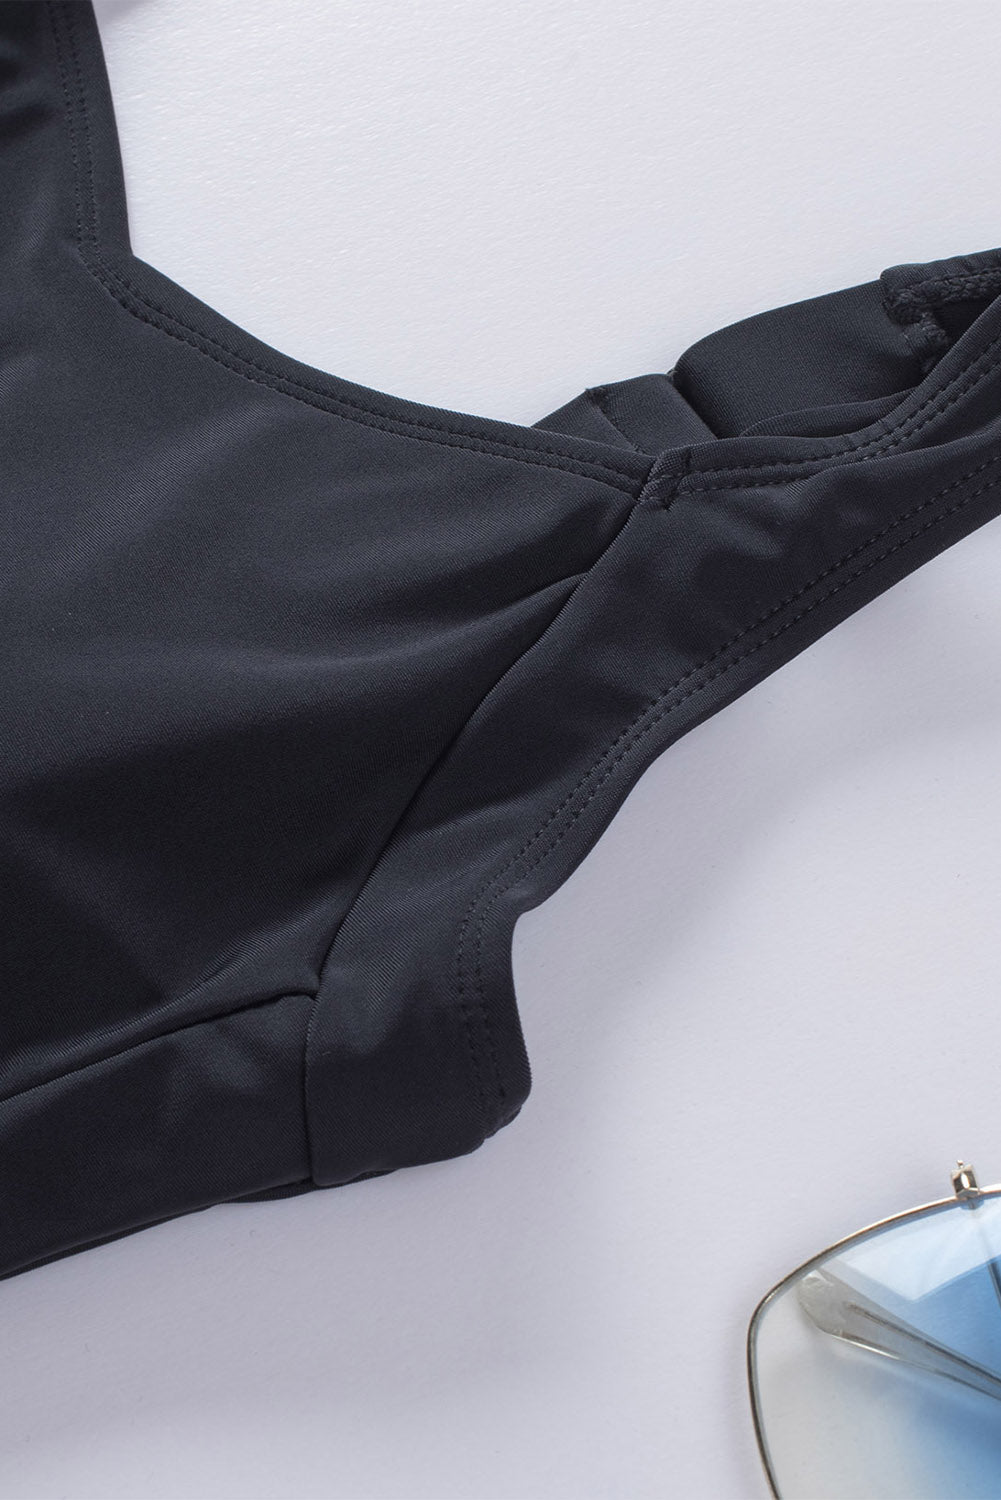 LC442787-102-S, LC442787-102-M, LC442787-102-L, LC442787-102-XL, LC442787-102-2XL, Black Women's One Piece Swimsuit Striped Pattern Print Sleeveless Bathing Suit